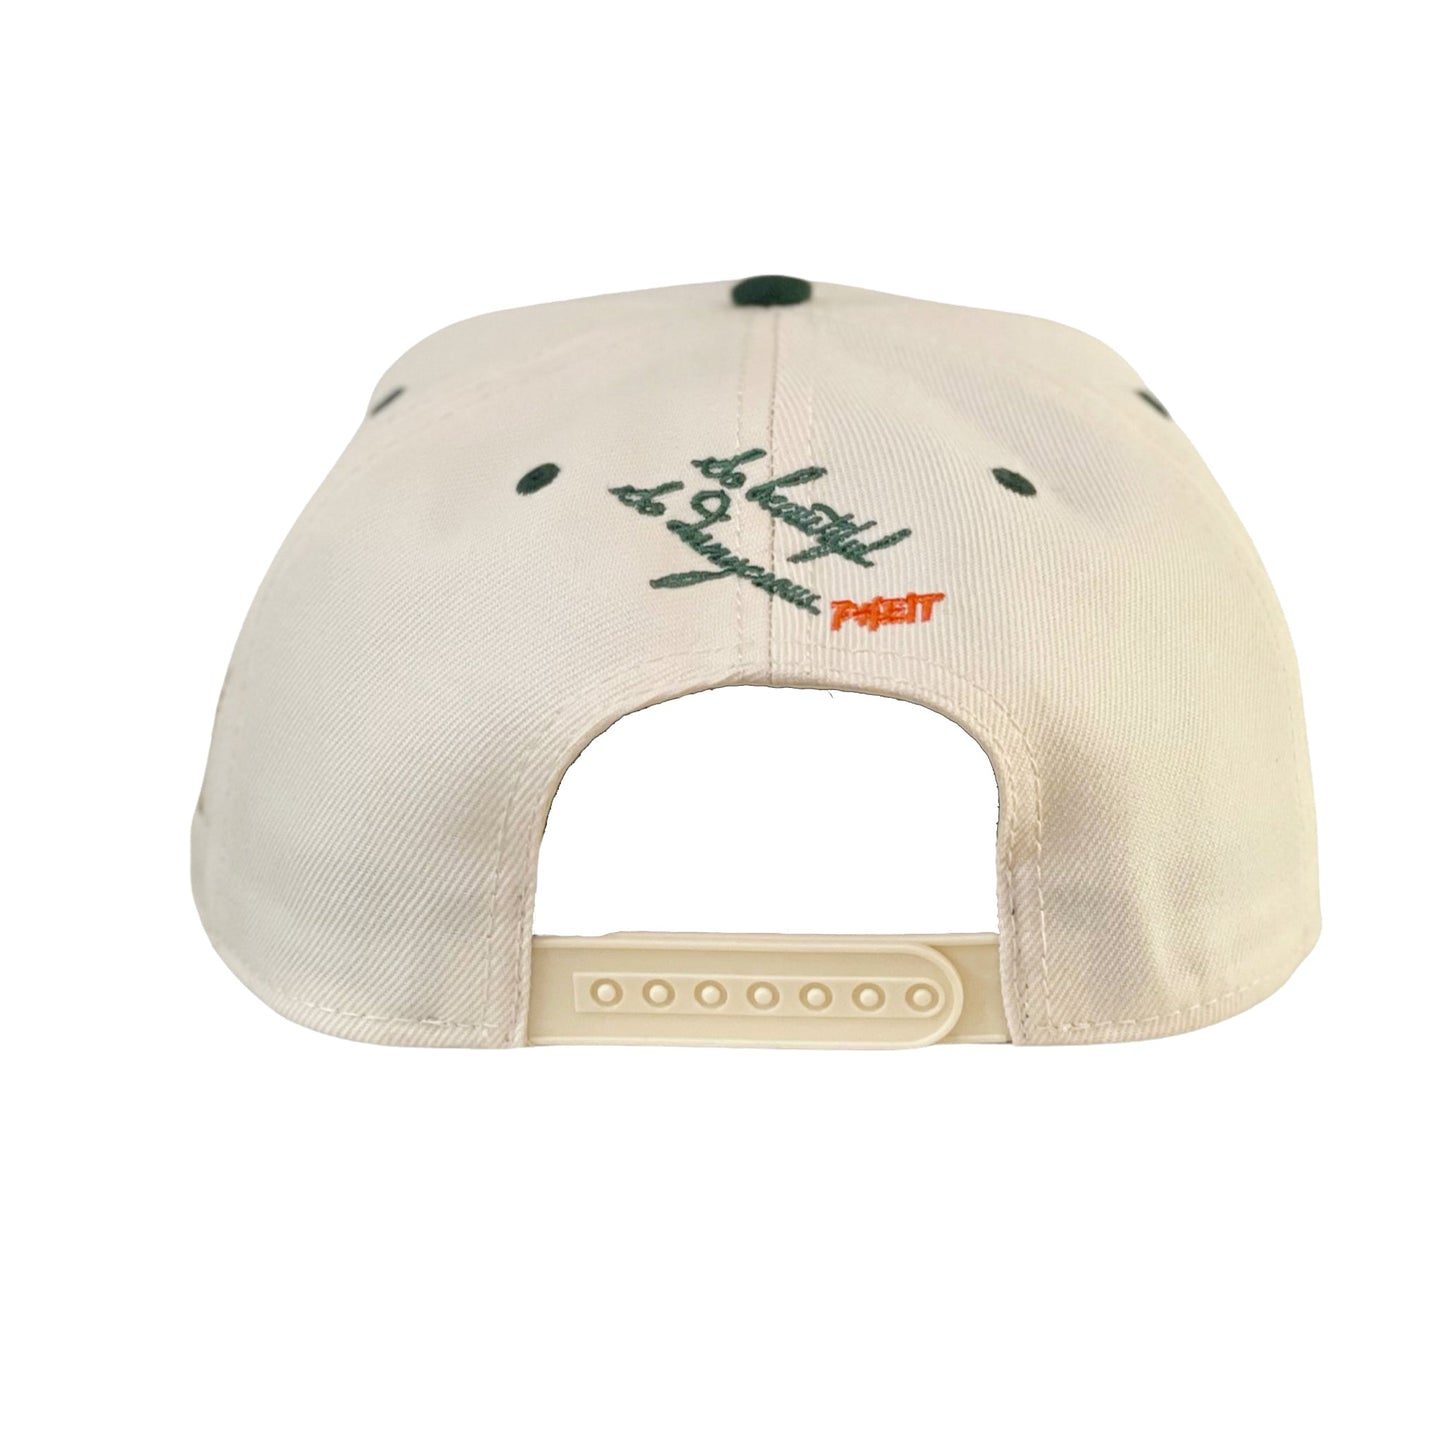 SBSD Green/Cream "A" cap